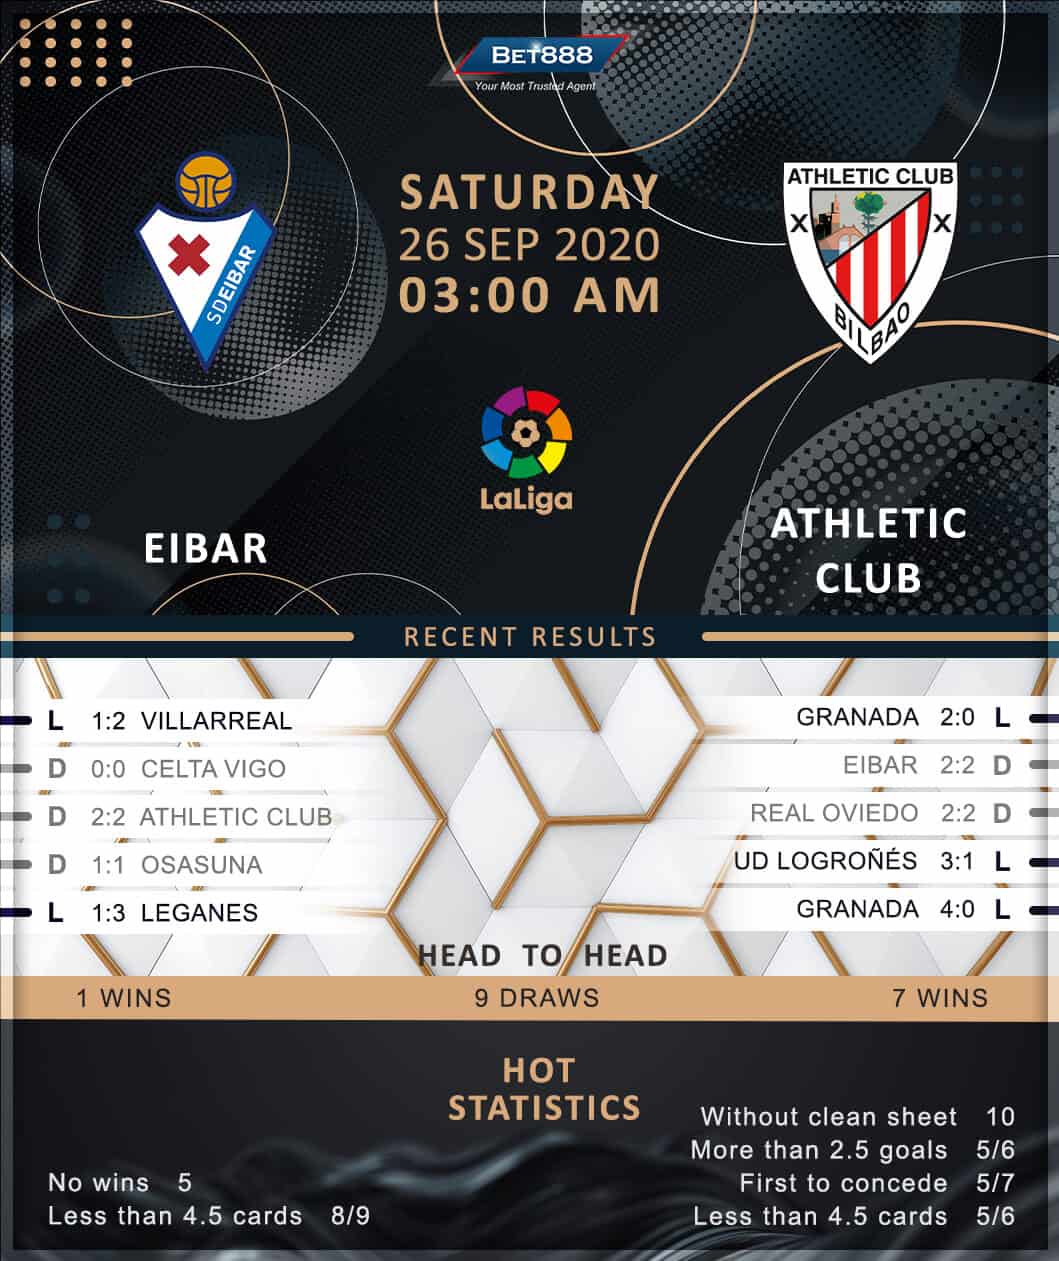 Eibar vs Athletic Club 26/09/20